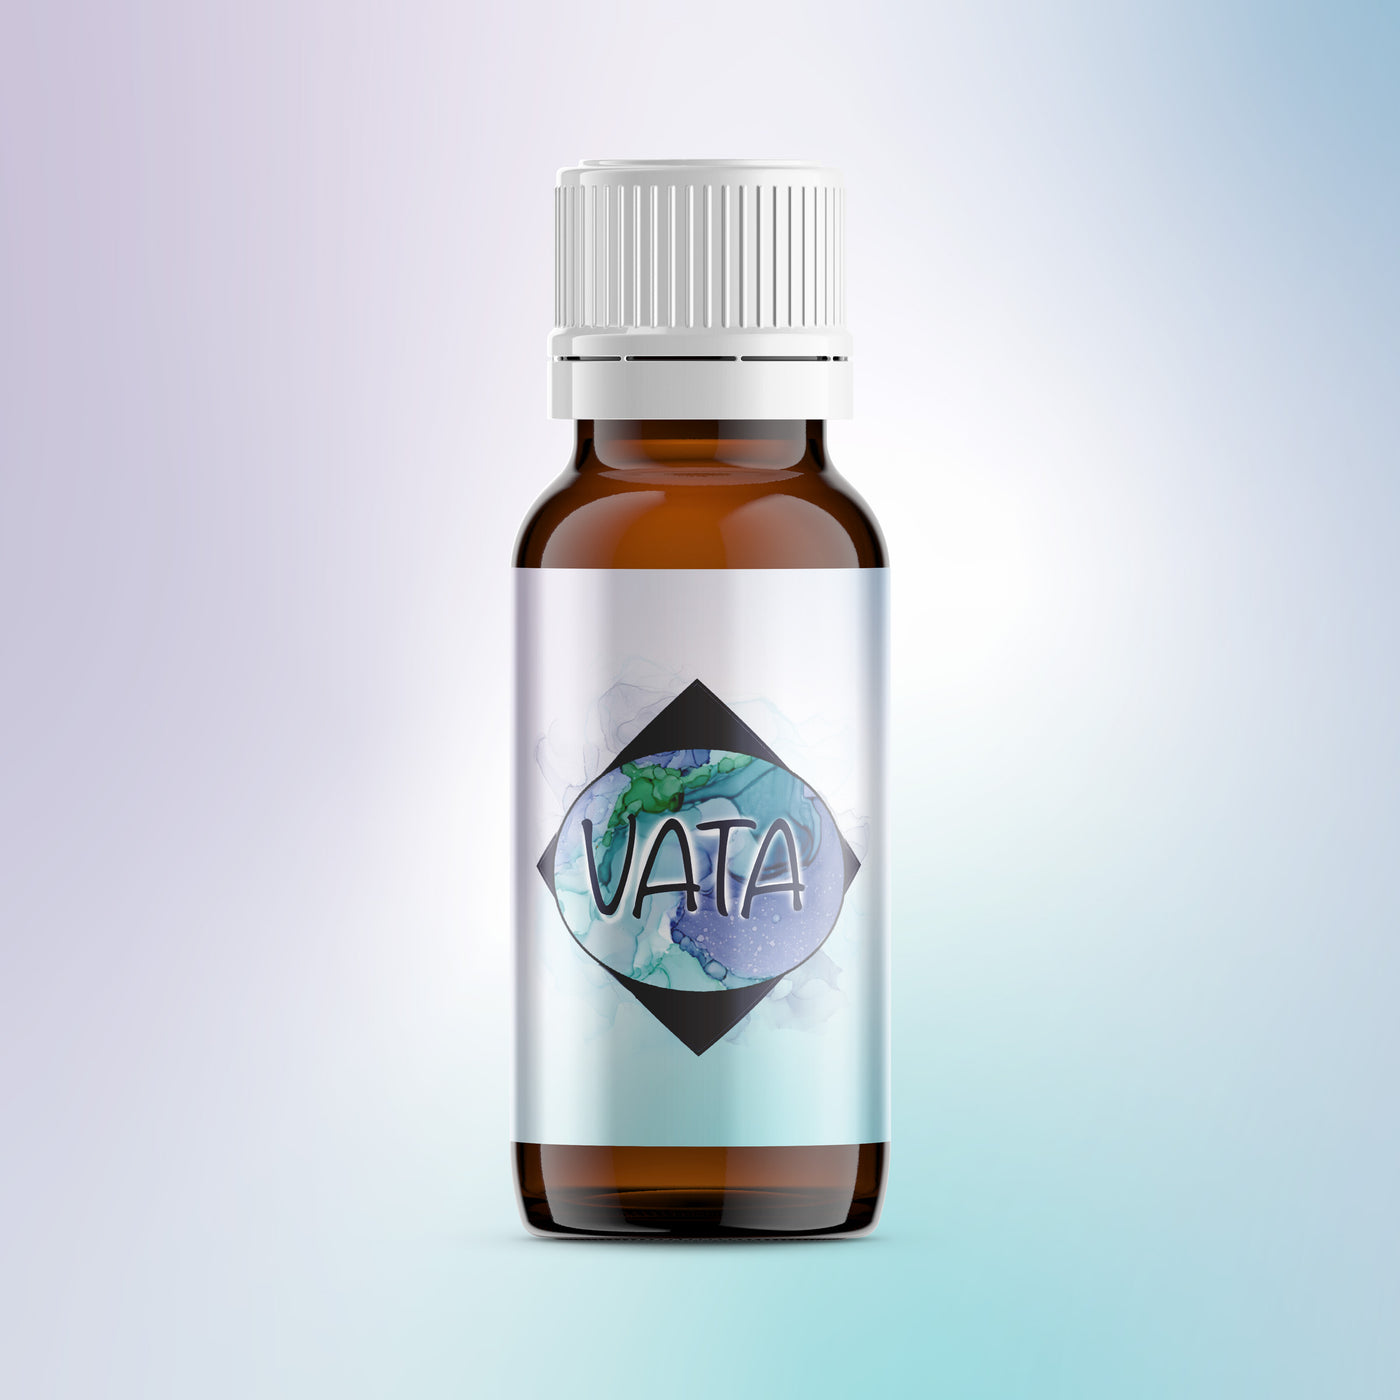 Vata - Synergie aromatique 100% pure